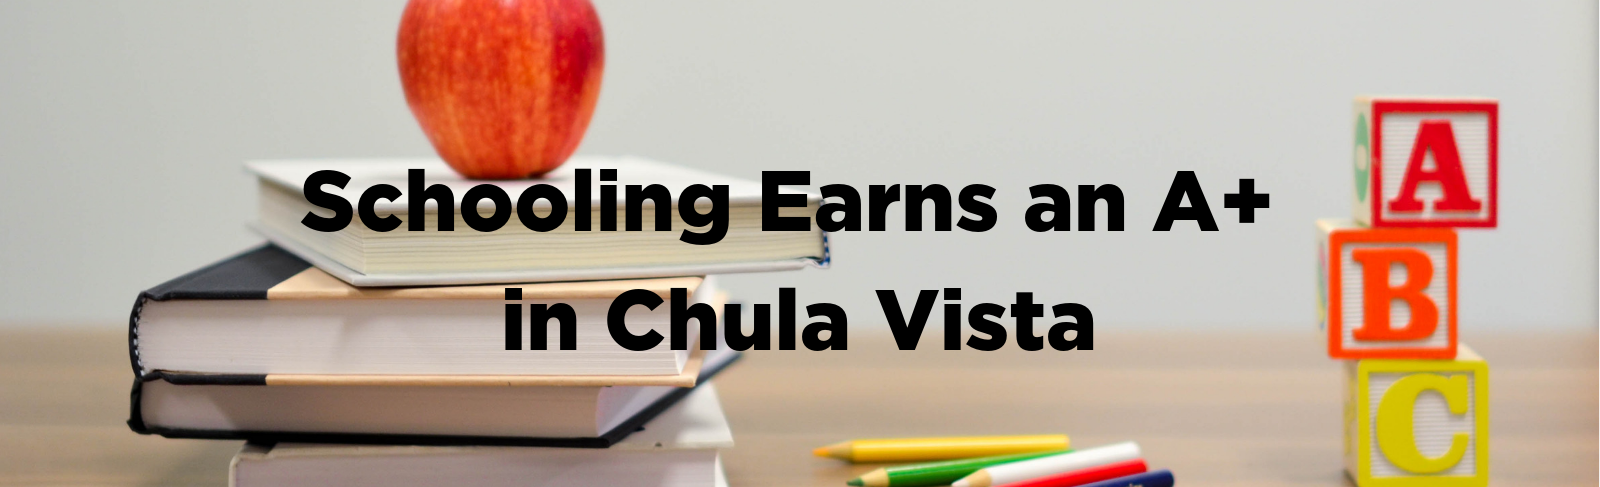 schooling earns an A+ in Chula Vista